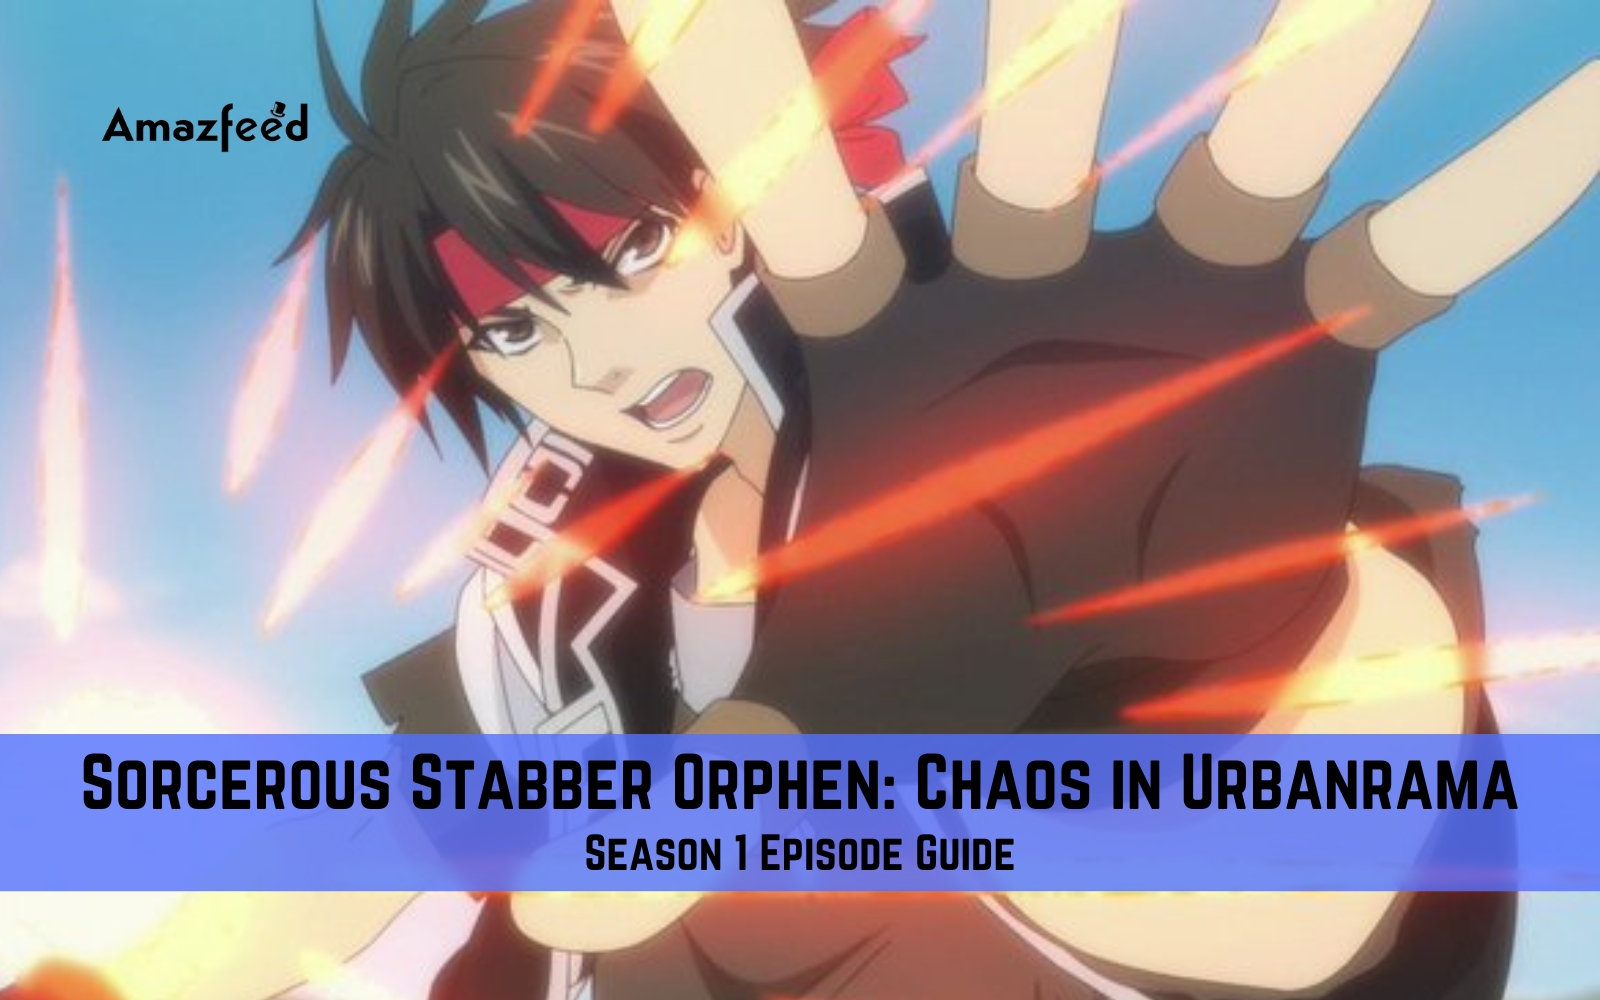 New Sorcerous Stabber Orphen Anime Gets 3rd Season Adapting 'Urban